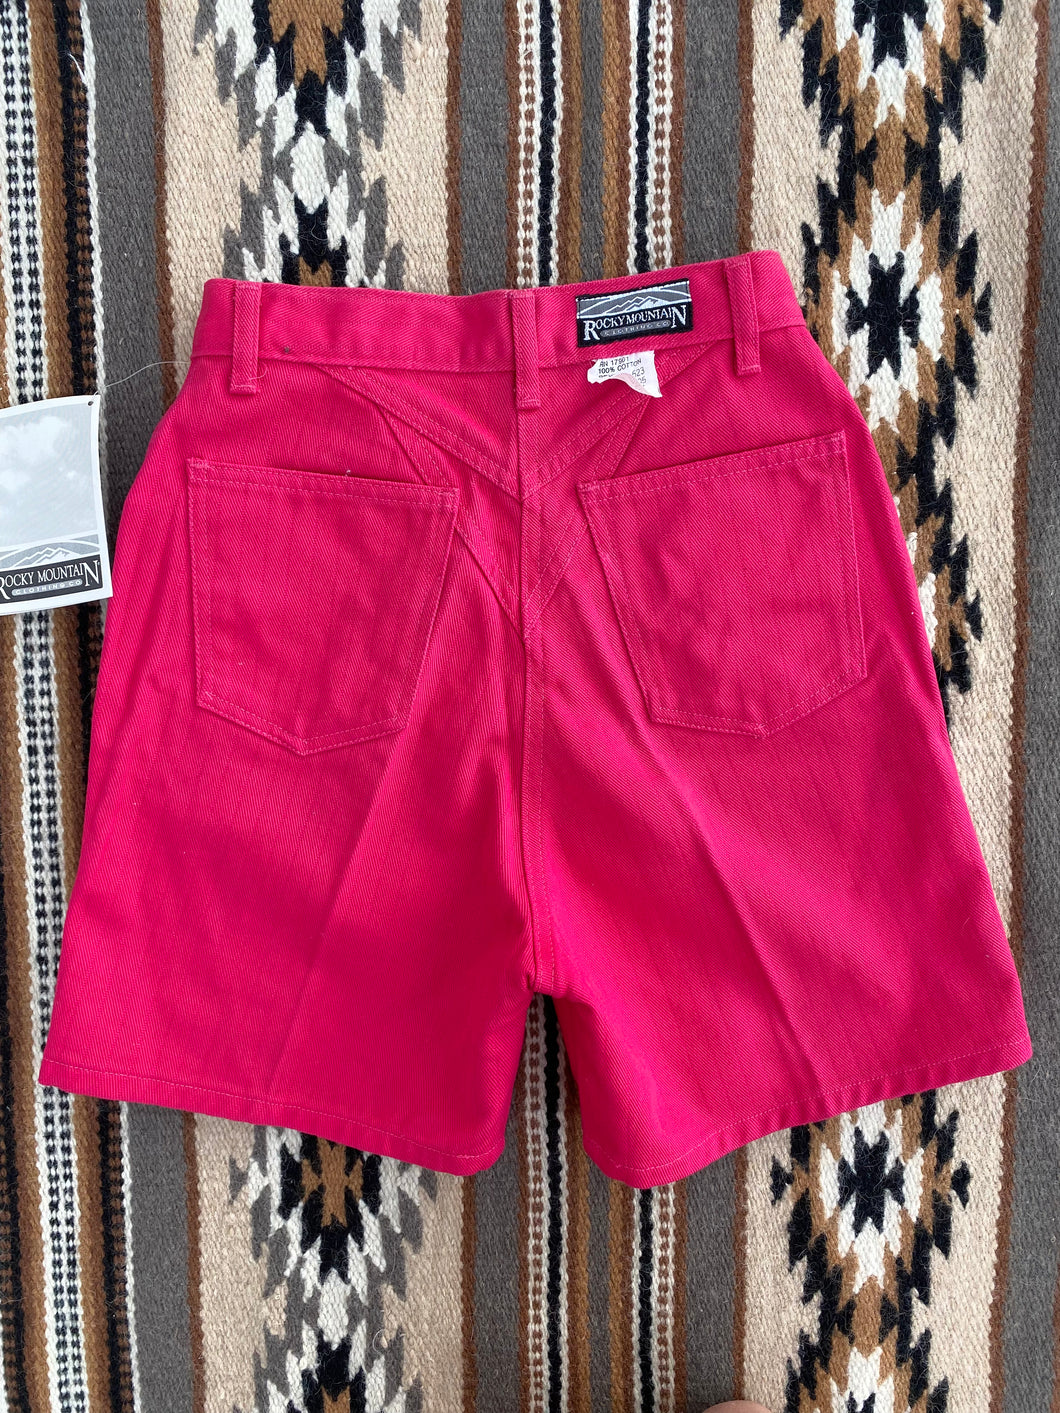 Pink Rocky Mountain Shorts